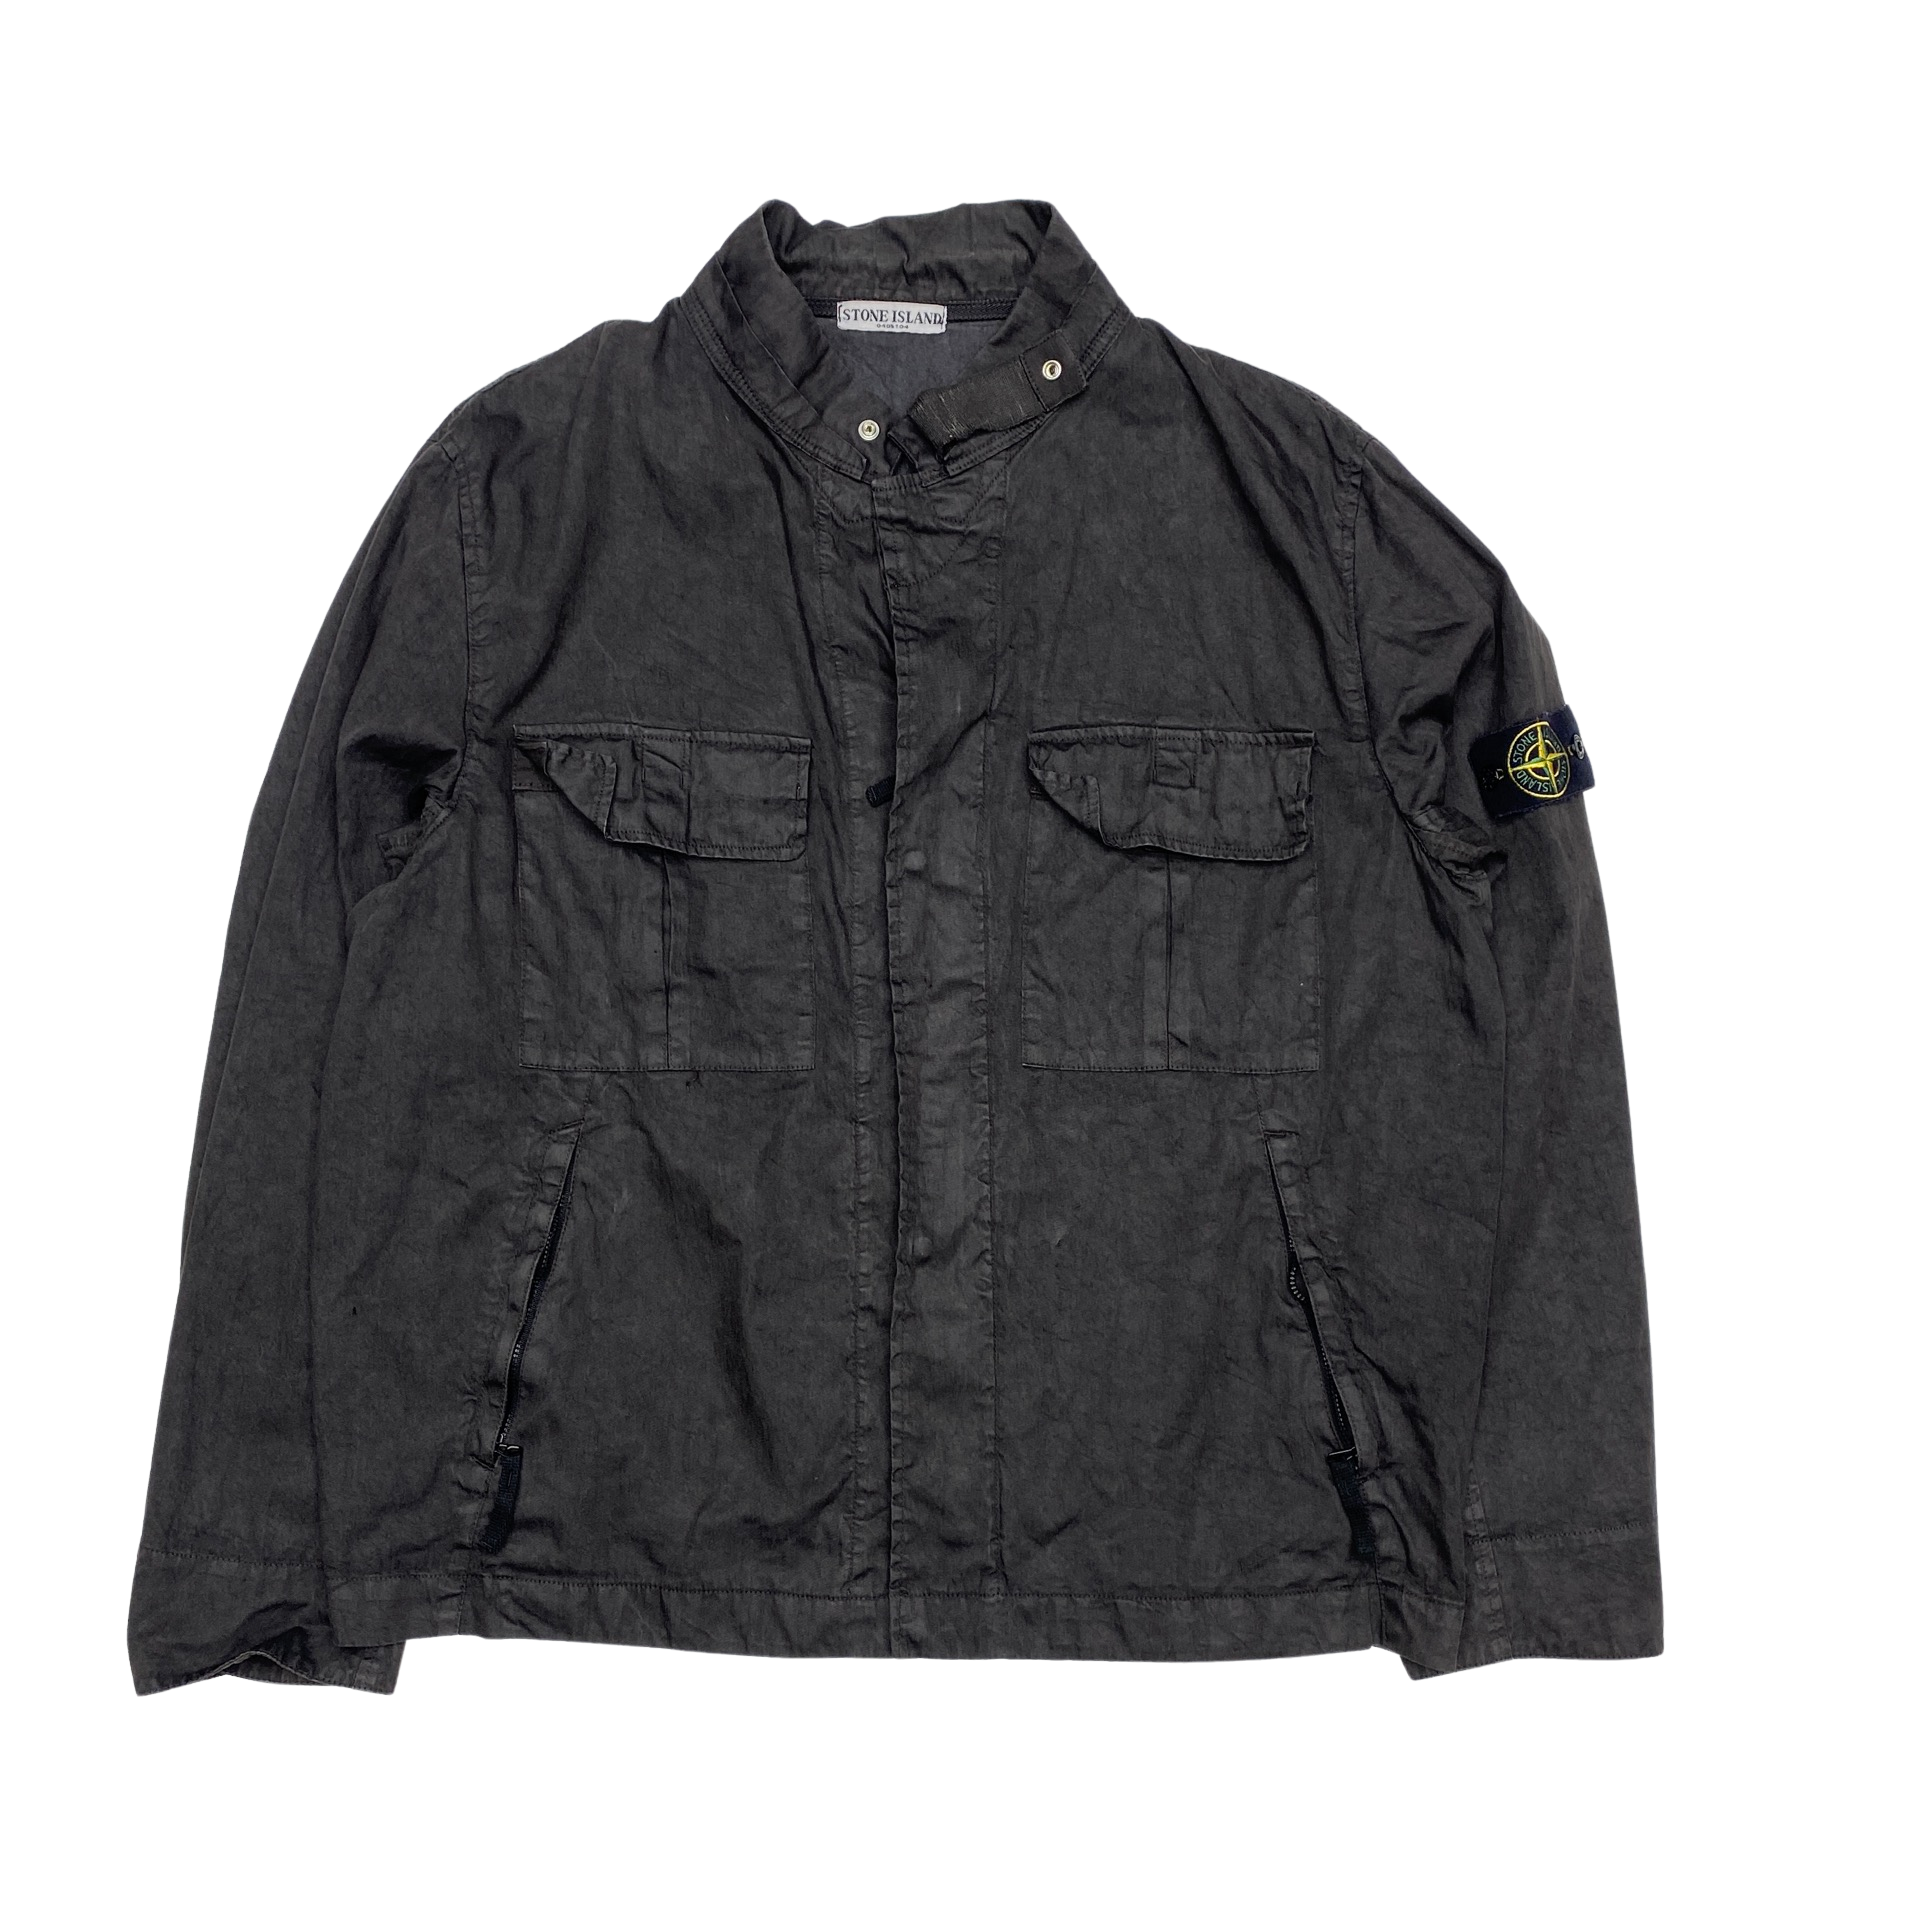 98SS Stone Island Lino flax jacket-